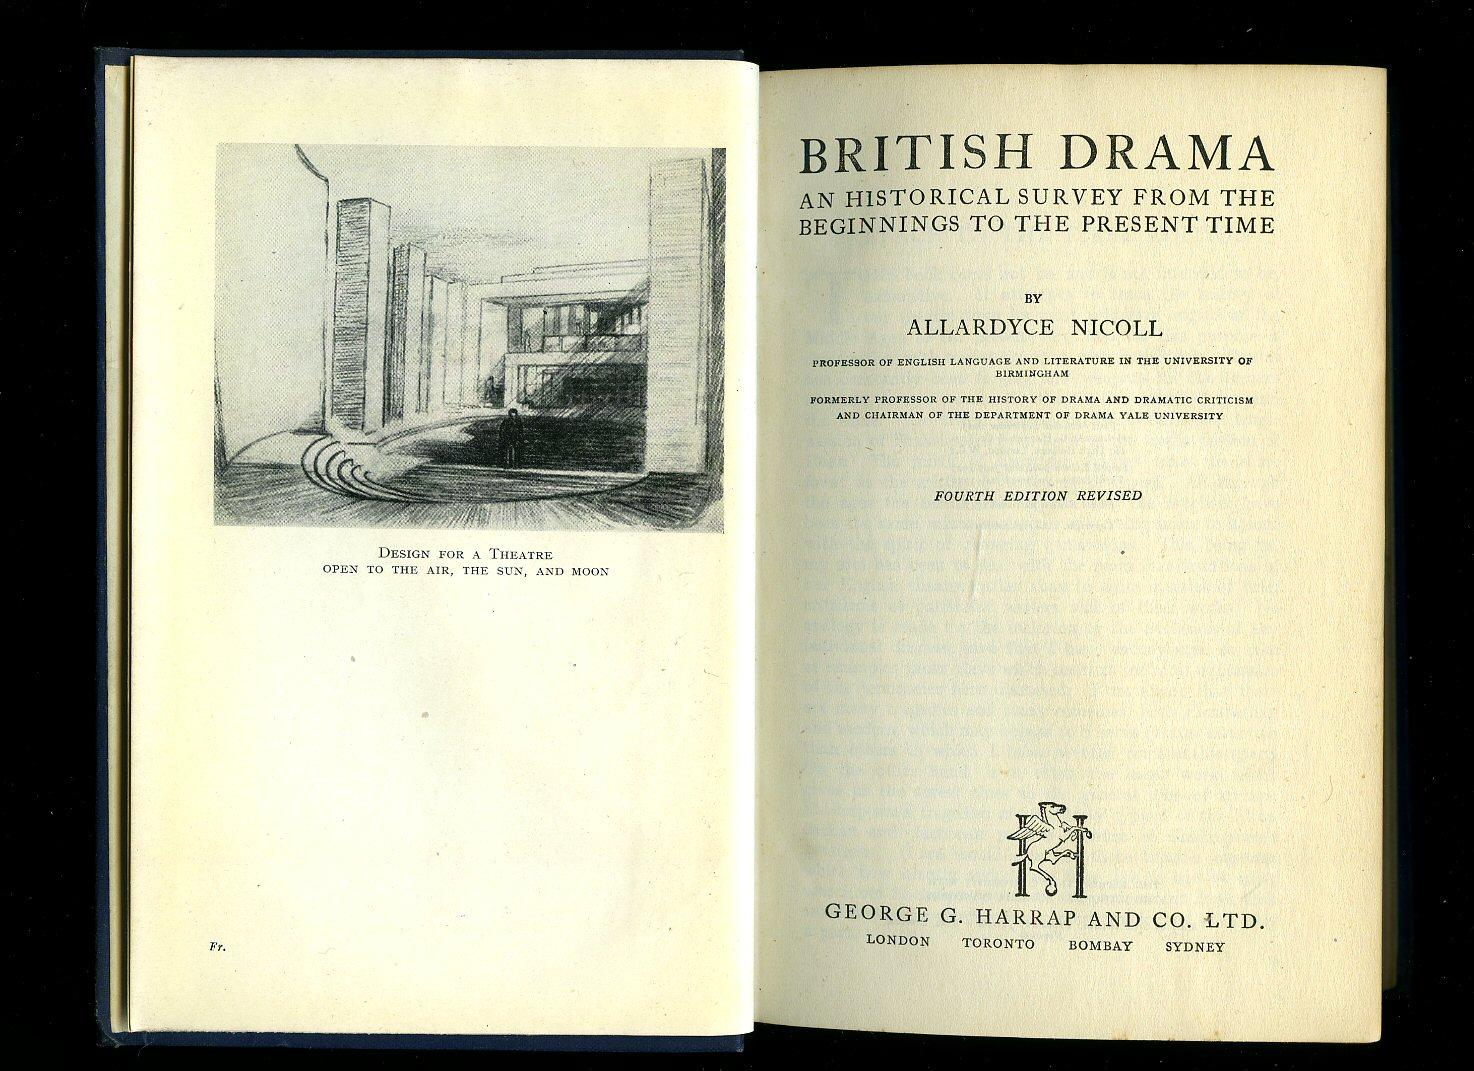 write an essay on british drama in the twentieth century